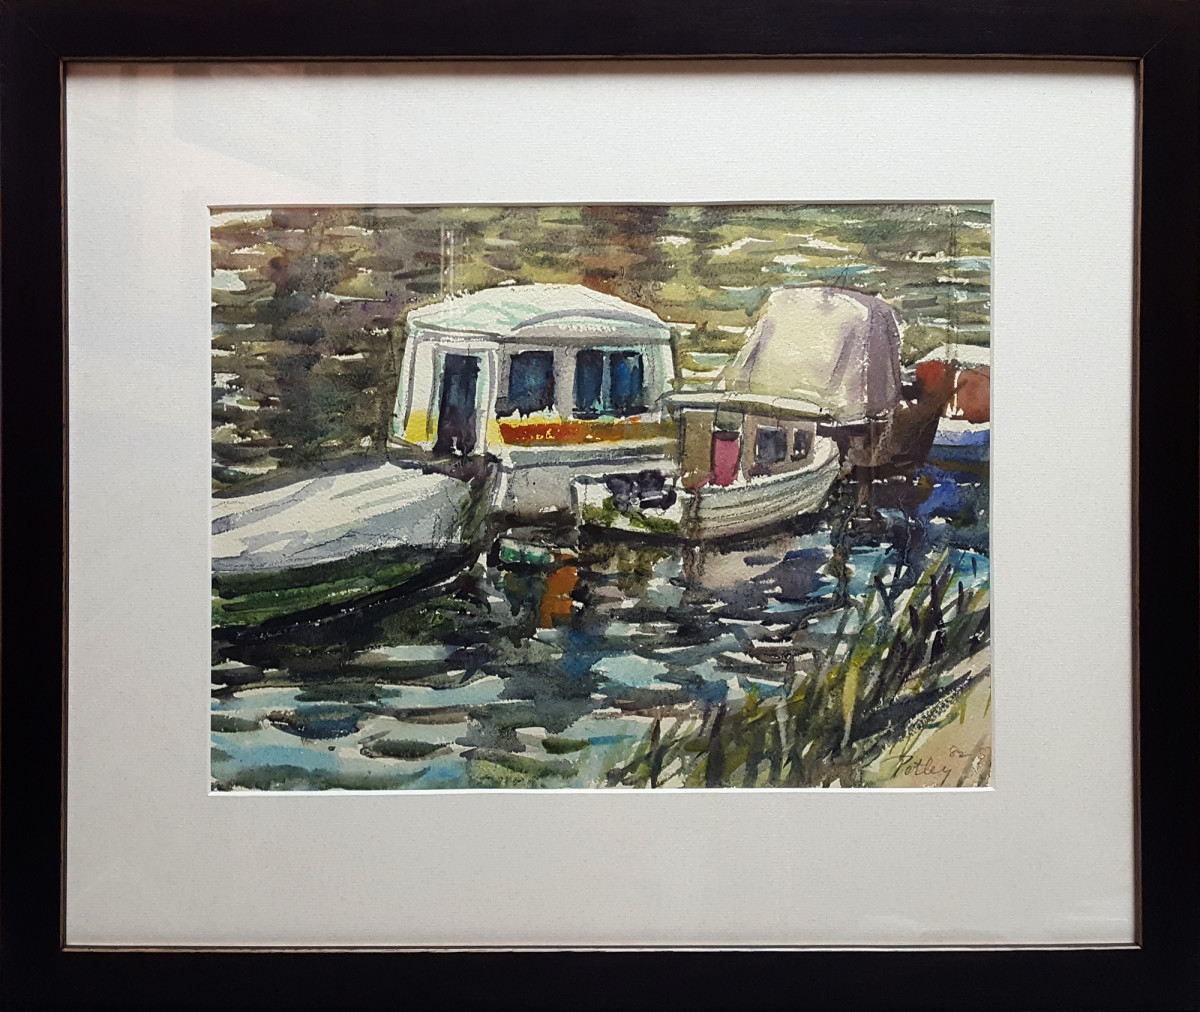 2315 - Boats at Sunset by Llewellyn Petley-Jones (1908-1986) 